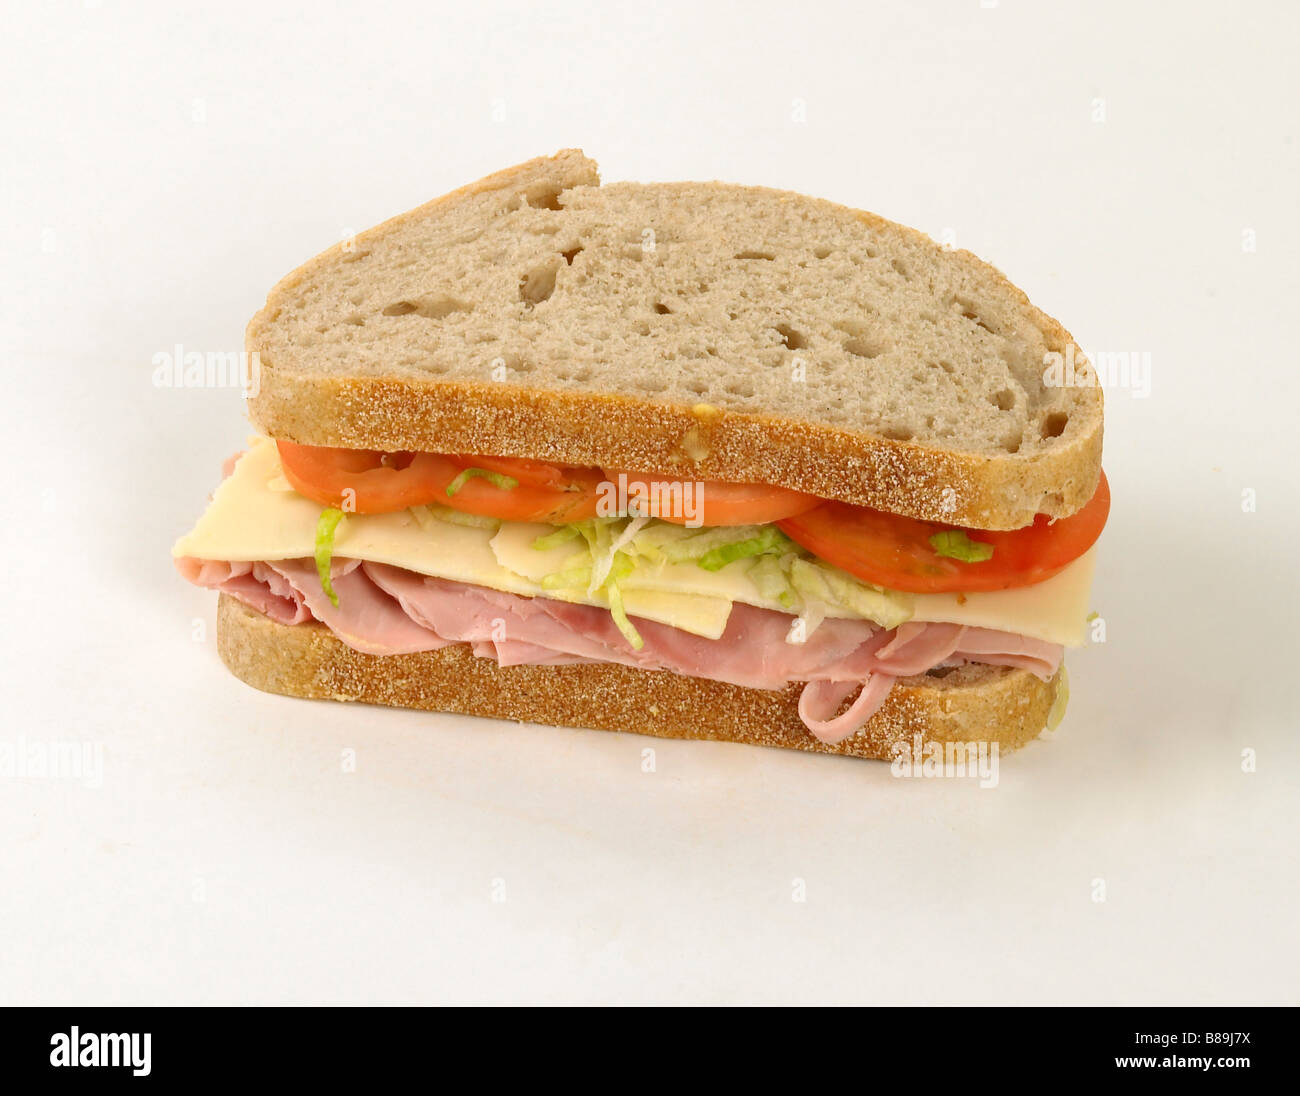 all american deli style sandwich on rye bread Stock Photo - Alamy